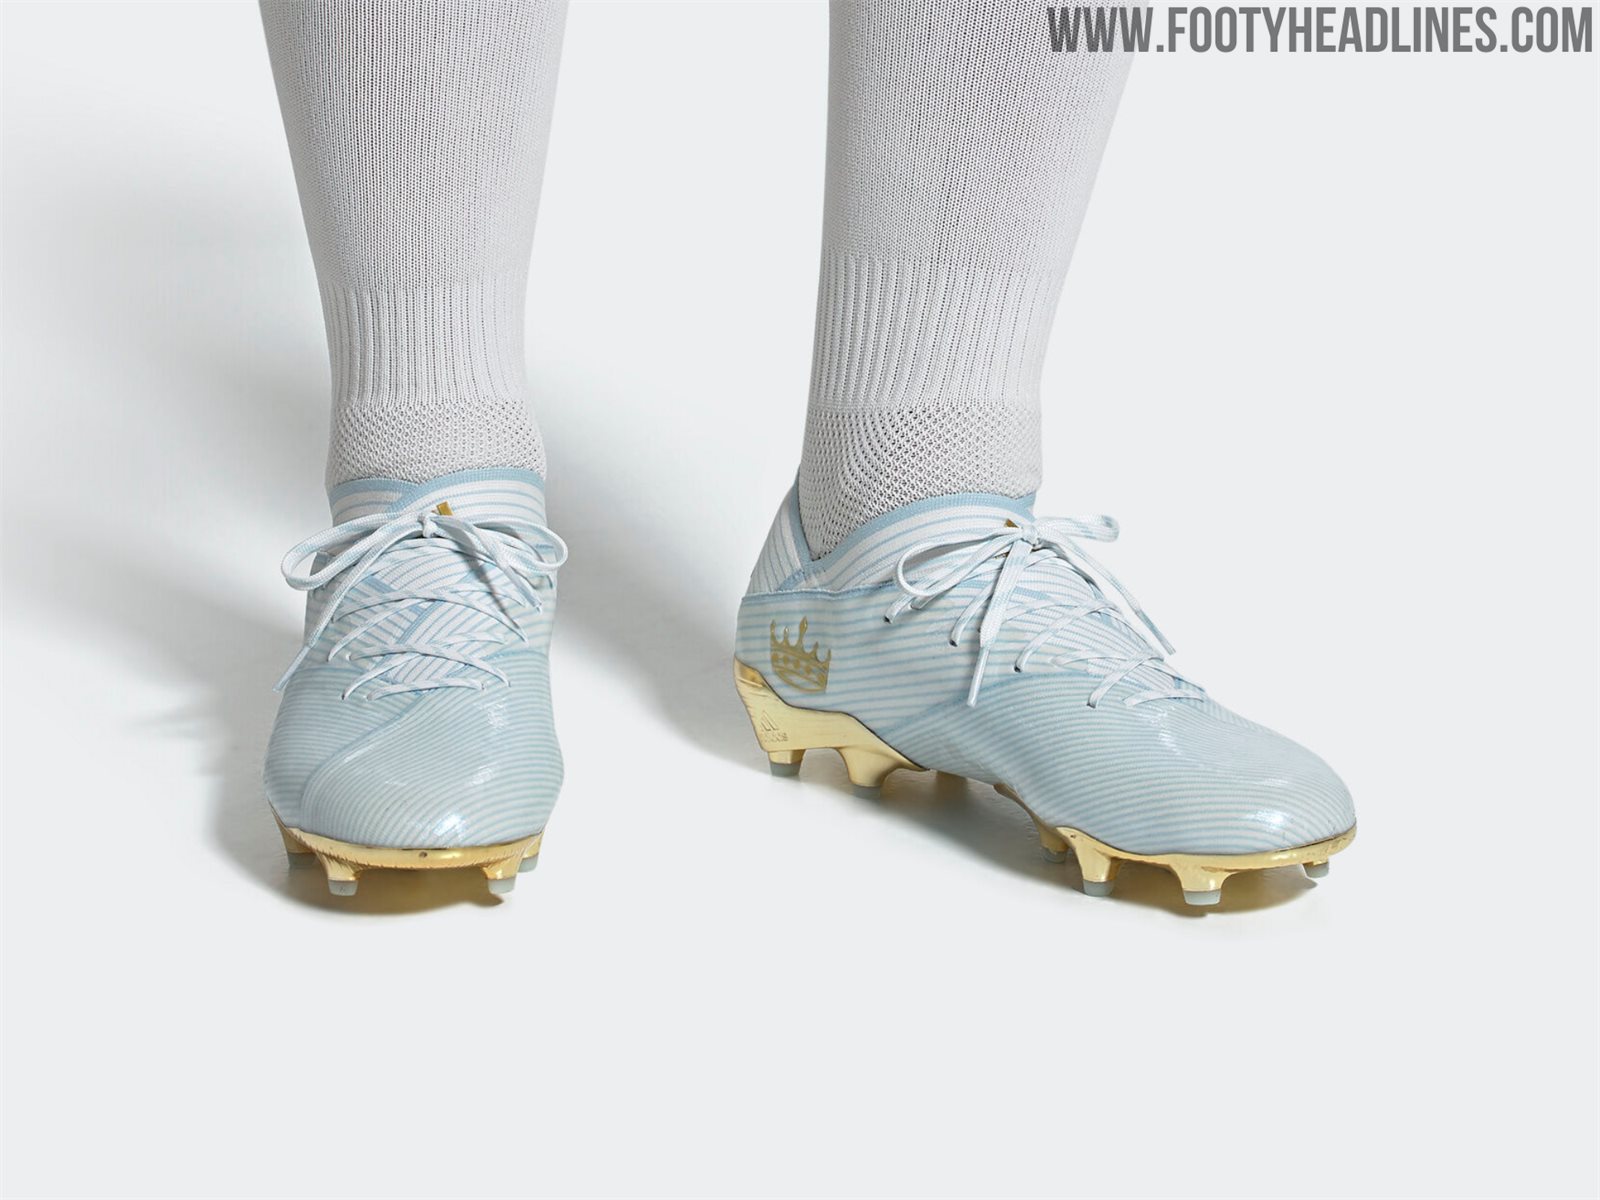 Esperanzado Redada Meditativo Limited-Edition Adidas Nemeziz Messi "15 Years" Boots Released | 15th  Anniversary of Pro Debut - Footy Headlines